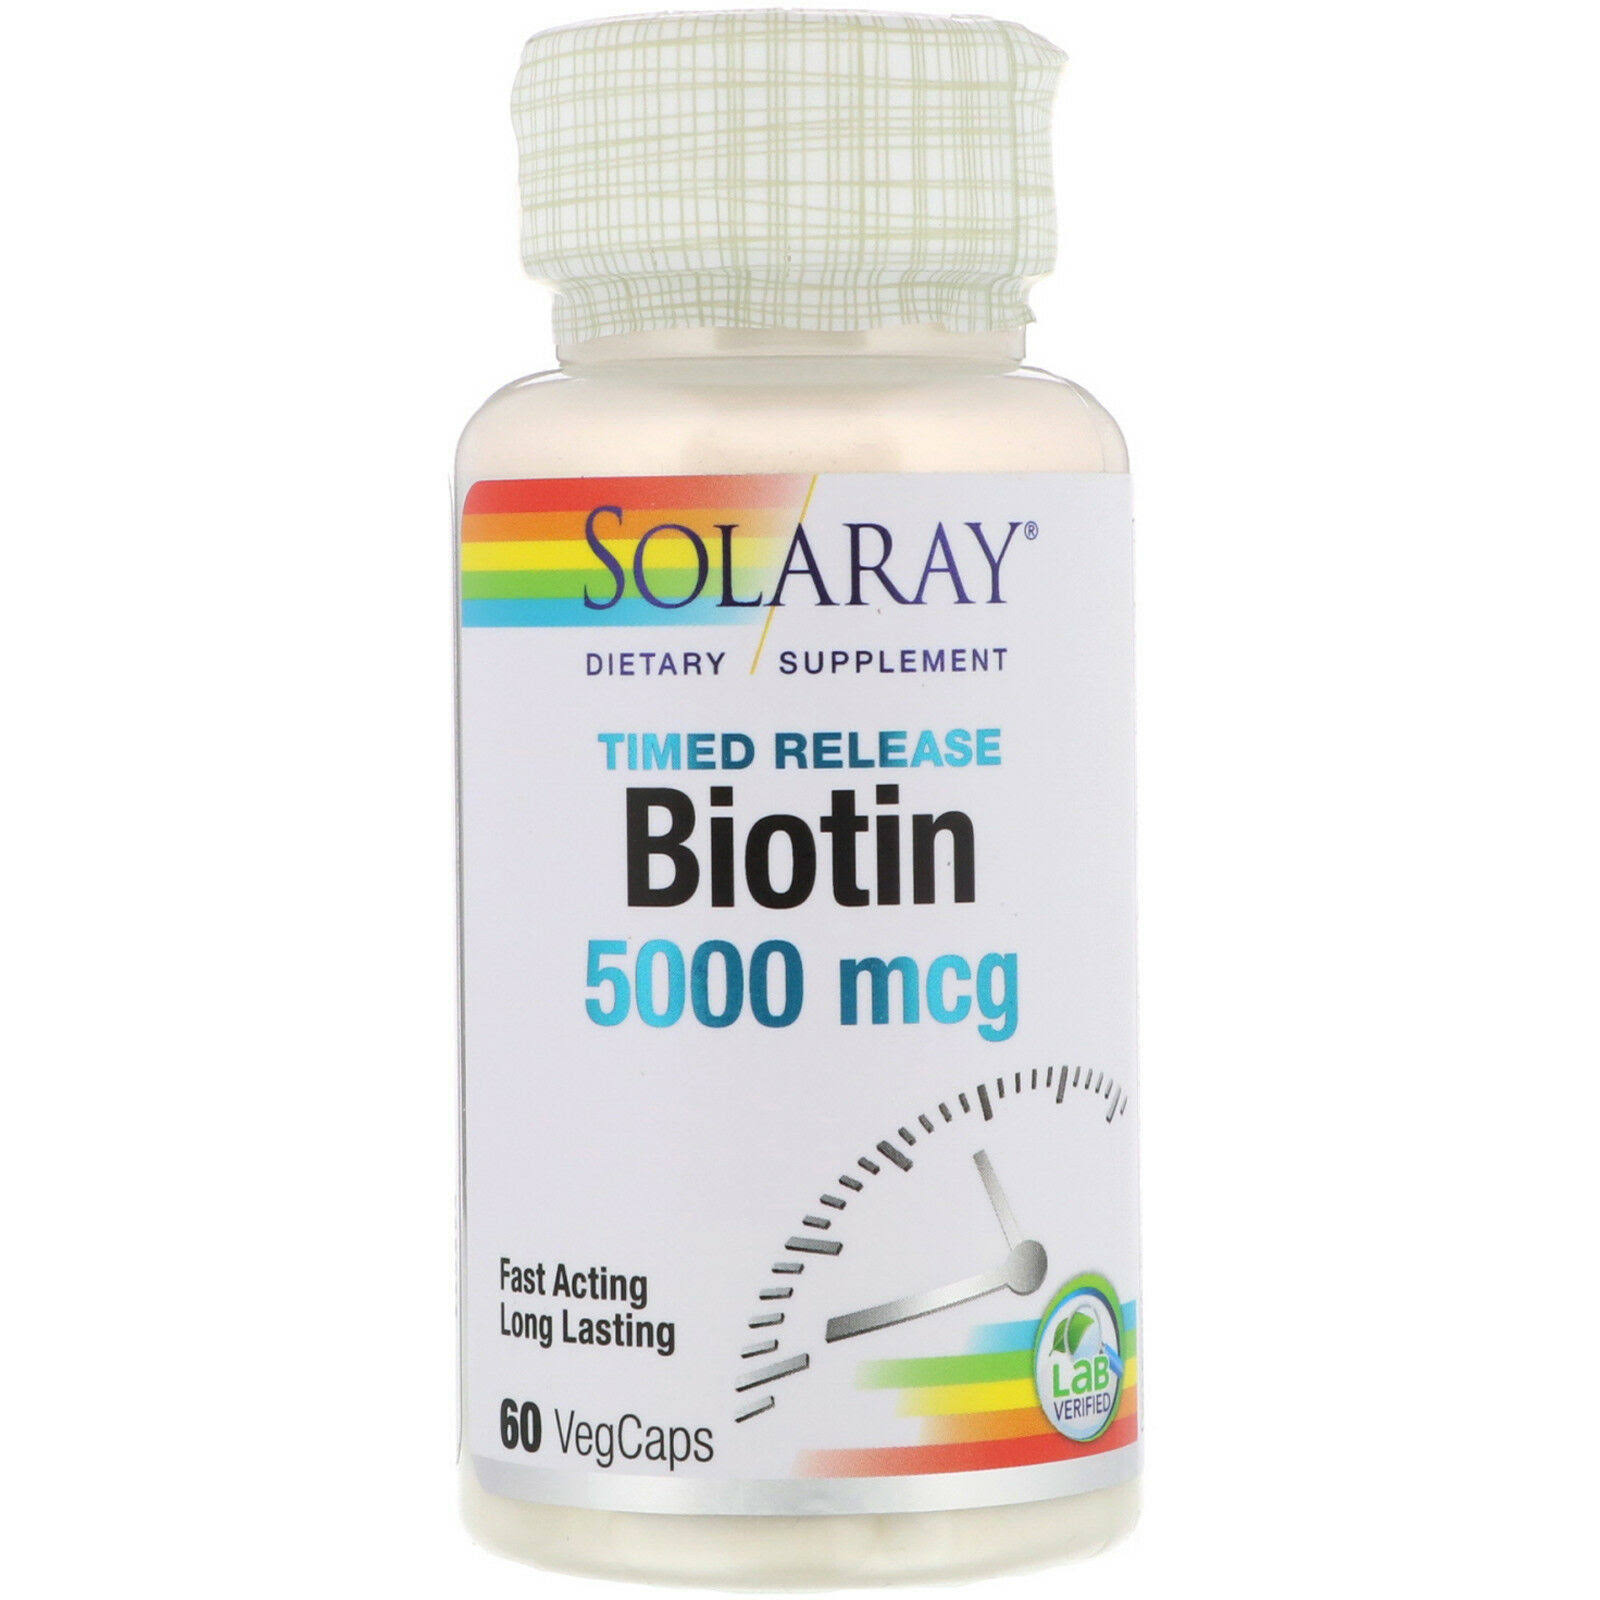 Solaray Biotin Supplement - 5000 mcg, 60 Vegetarian Capsules